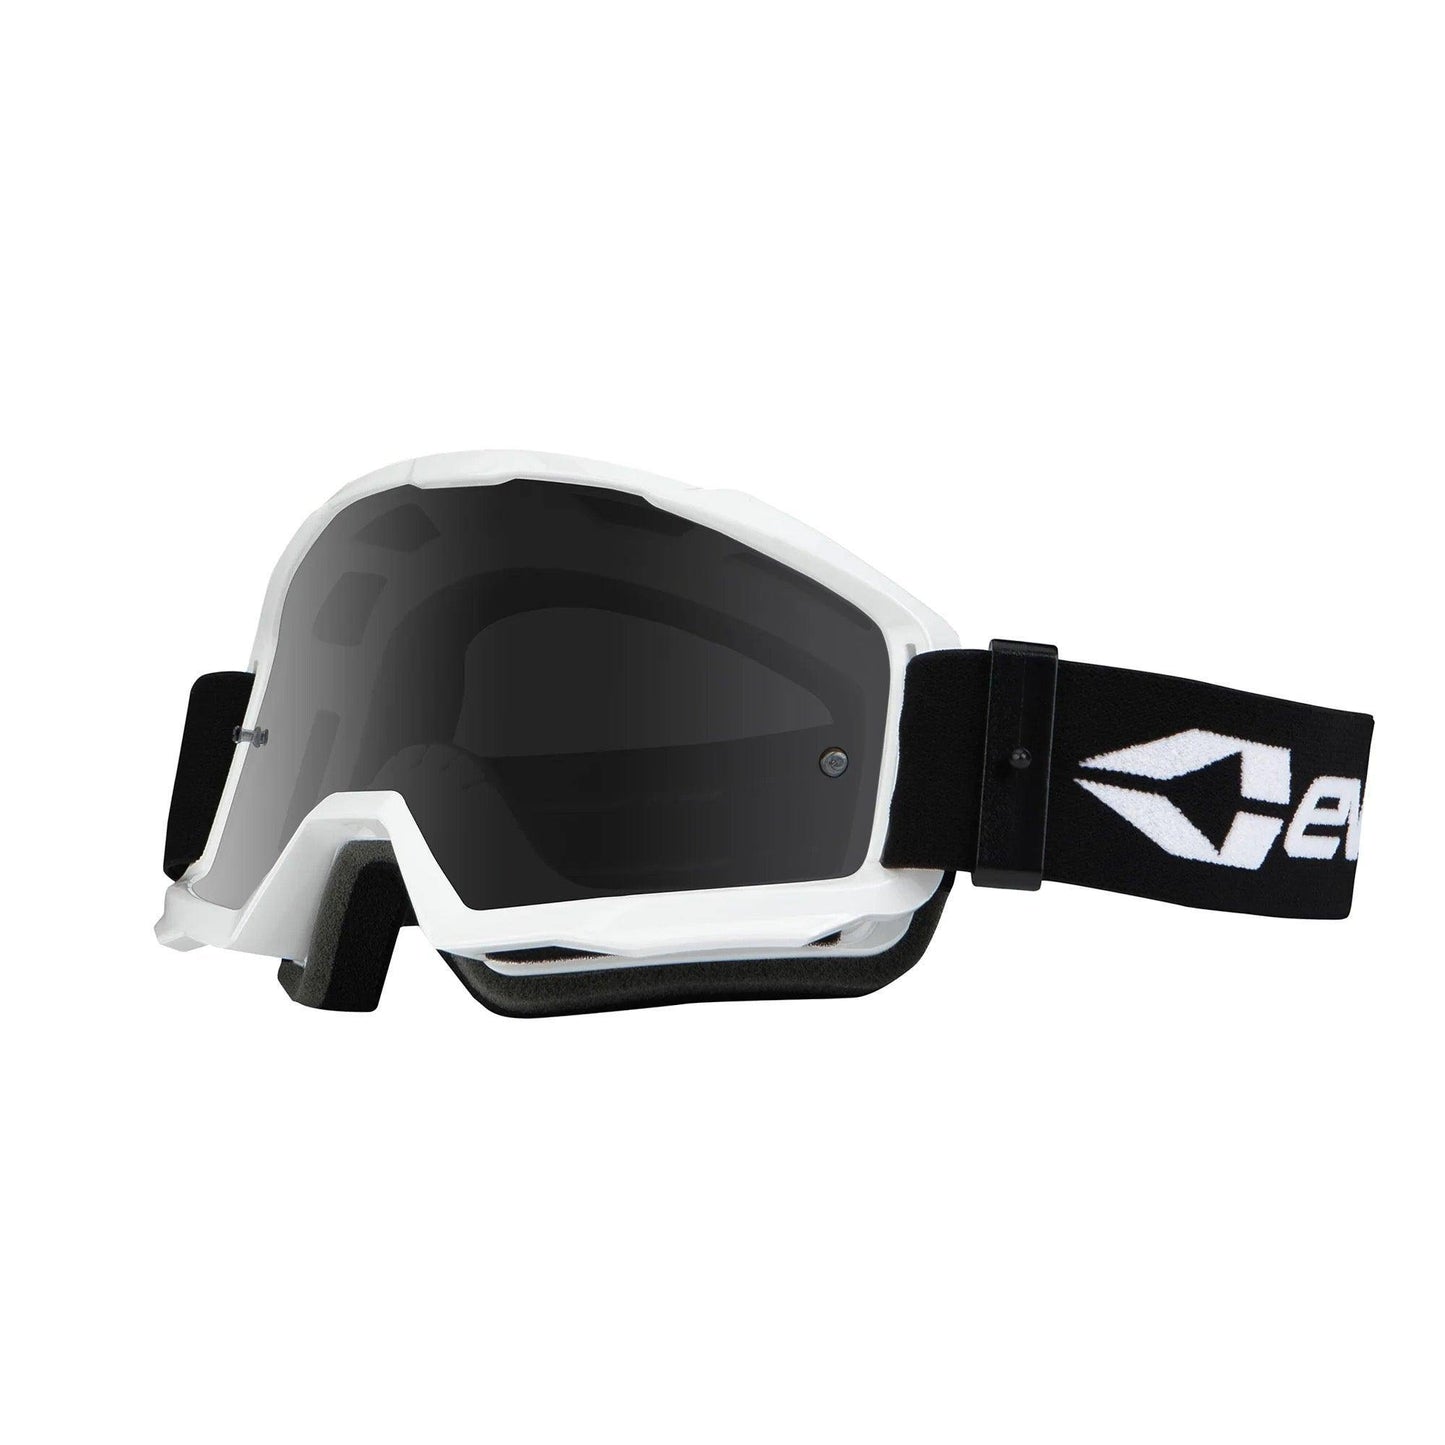 Premium EVS Motocross Goggles - Q9 PowerSports USA